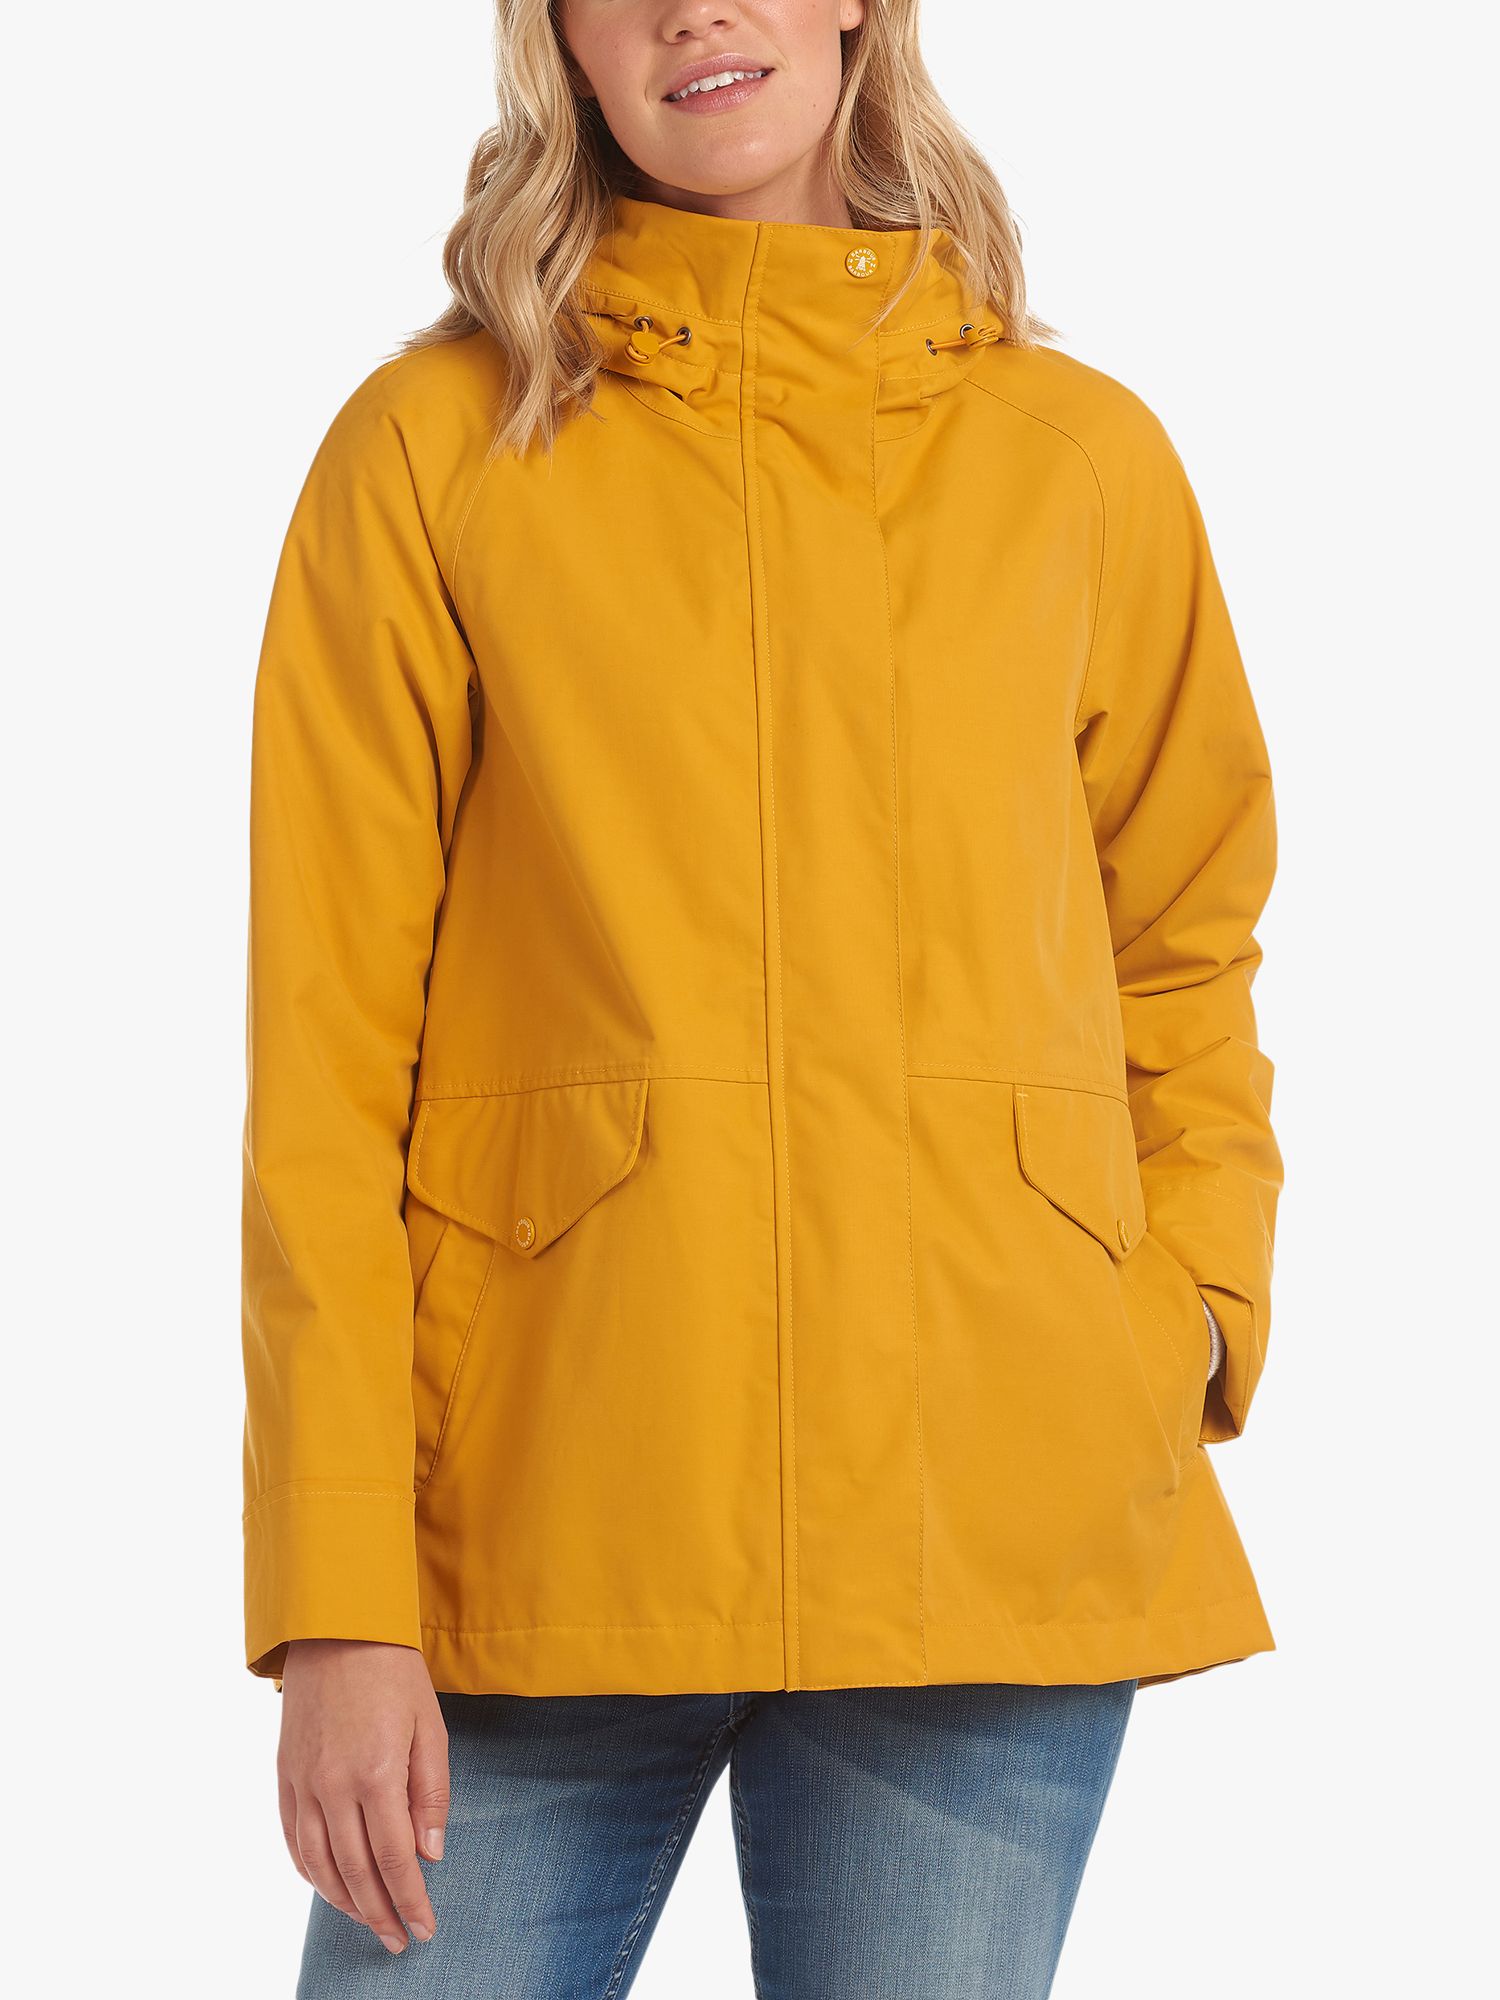 barbour yellow raincoat